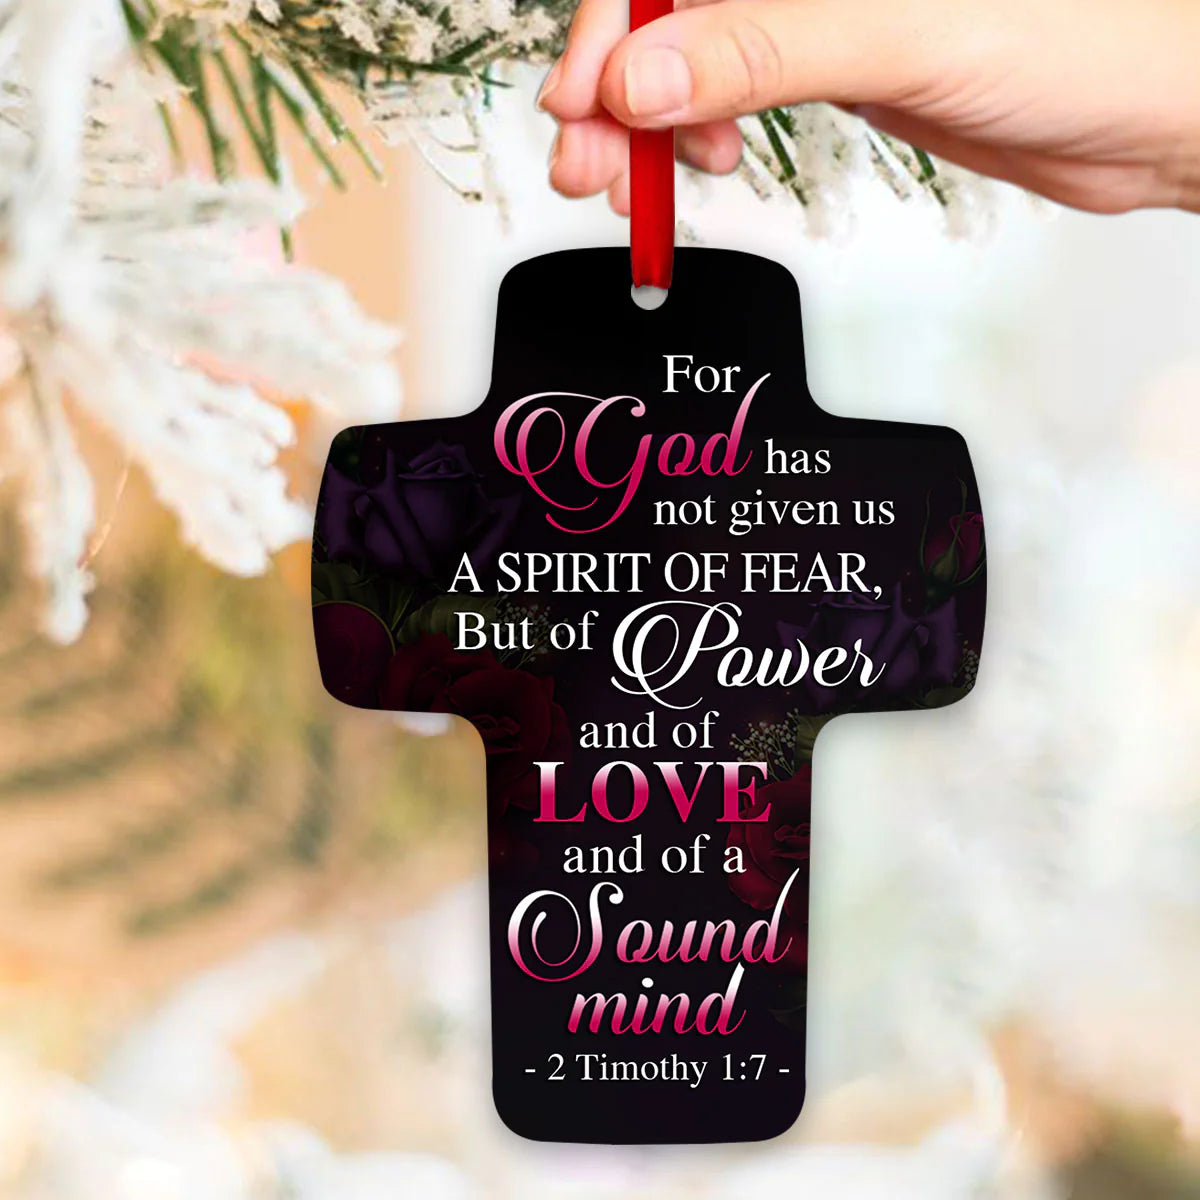 Christianartbag Ornament, God Has Given Us Power And Sound Mind 2 Timothy 1:7, Christmas Ornament, Christmas Gift, Personalized Ornament. - Christian Art Bag